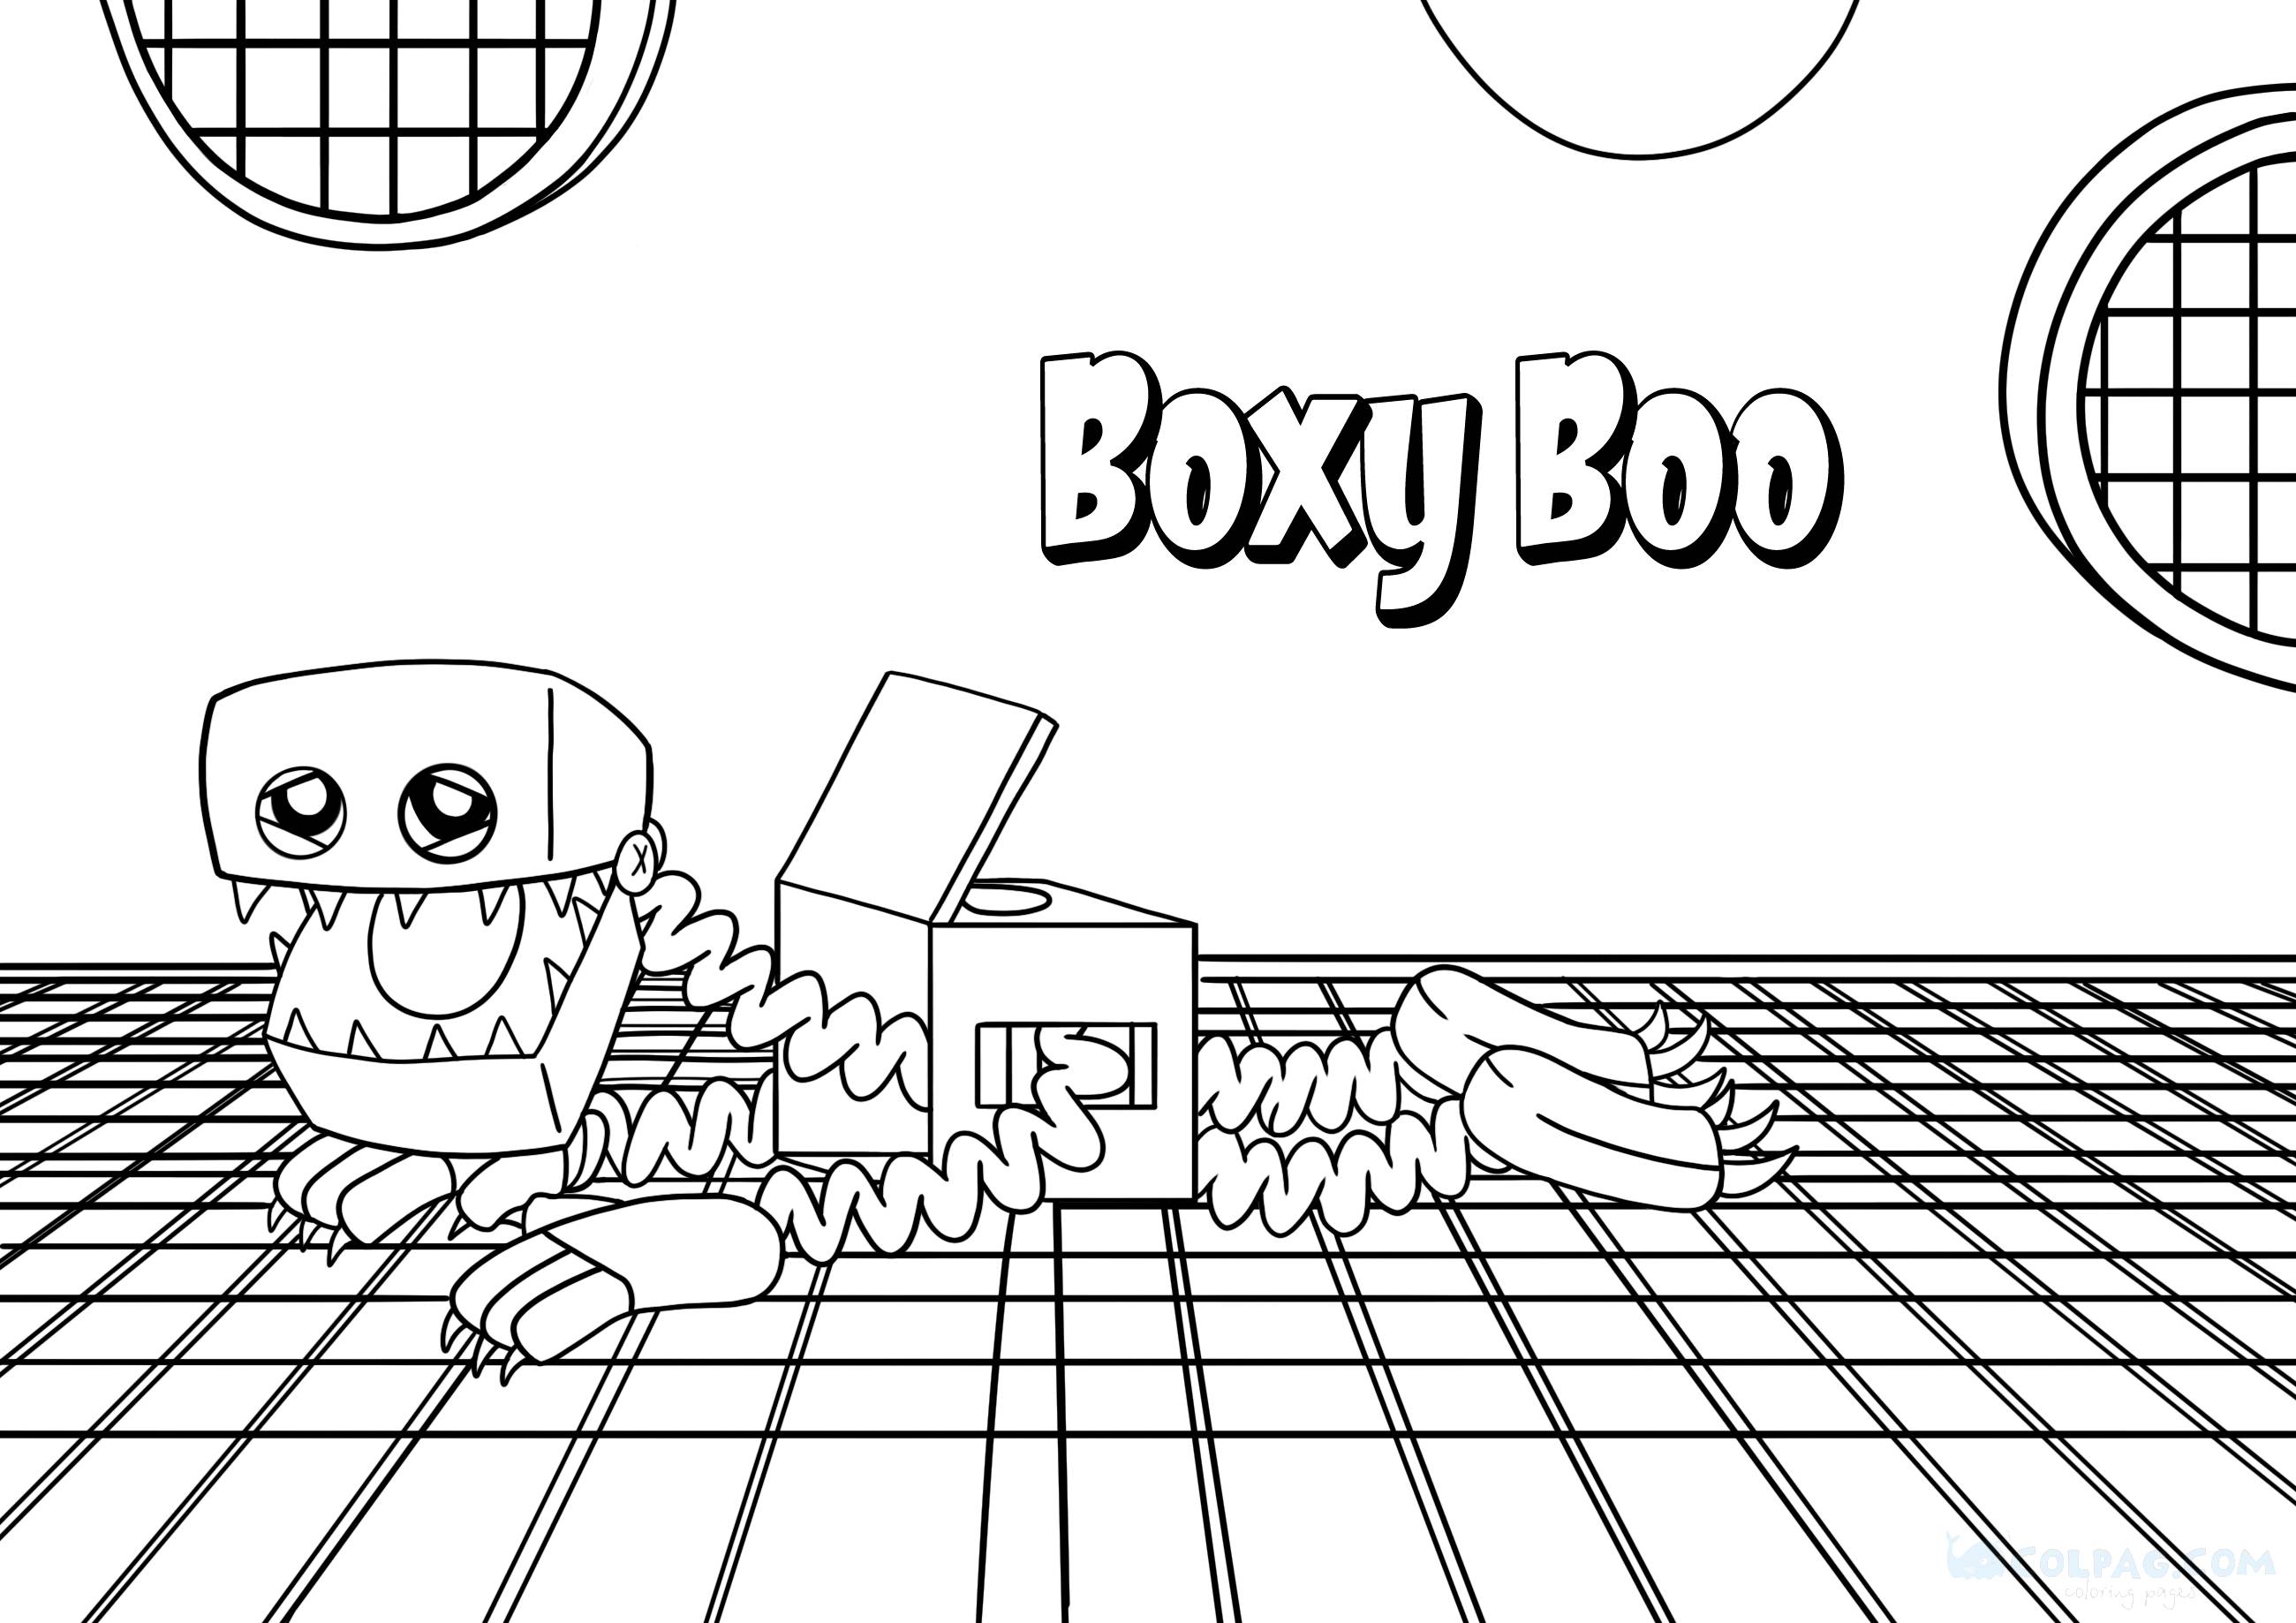 Desenhos para colorir de Boxy Boo (Projeto: Playtime)